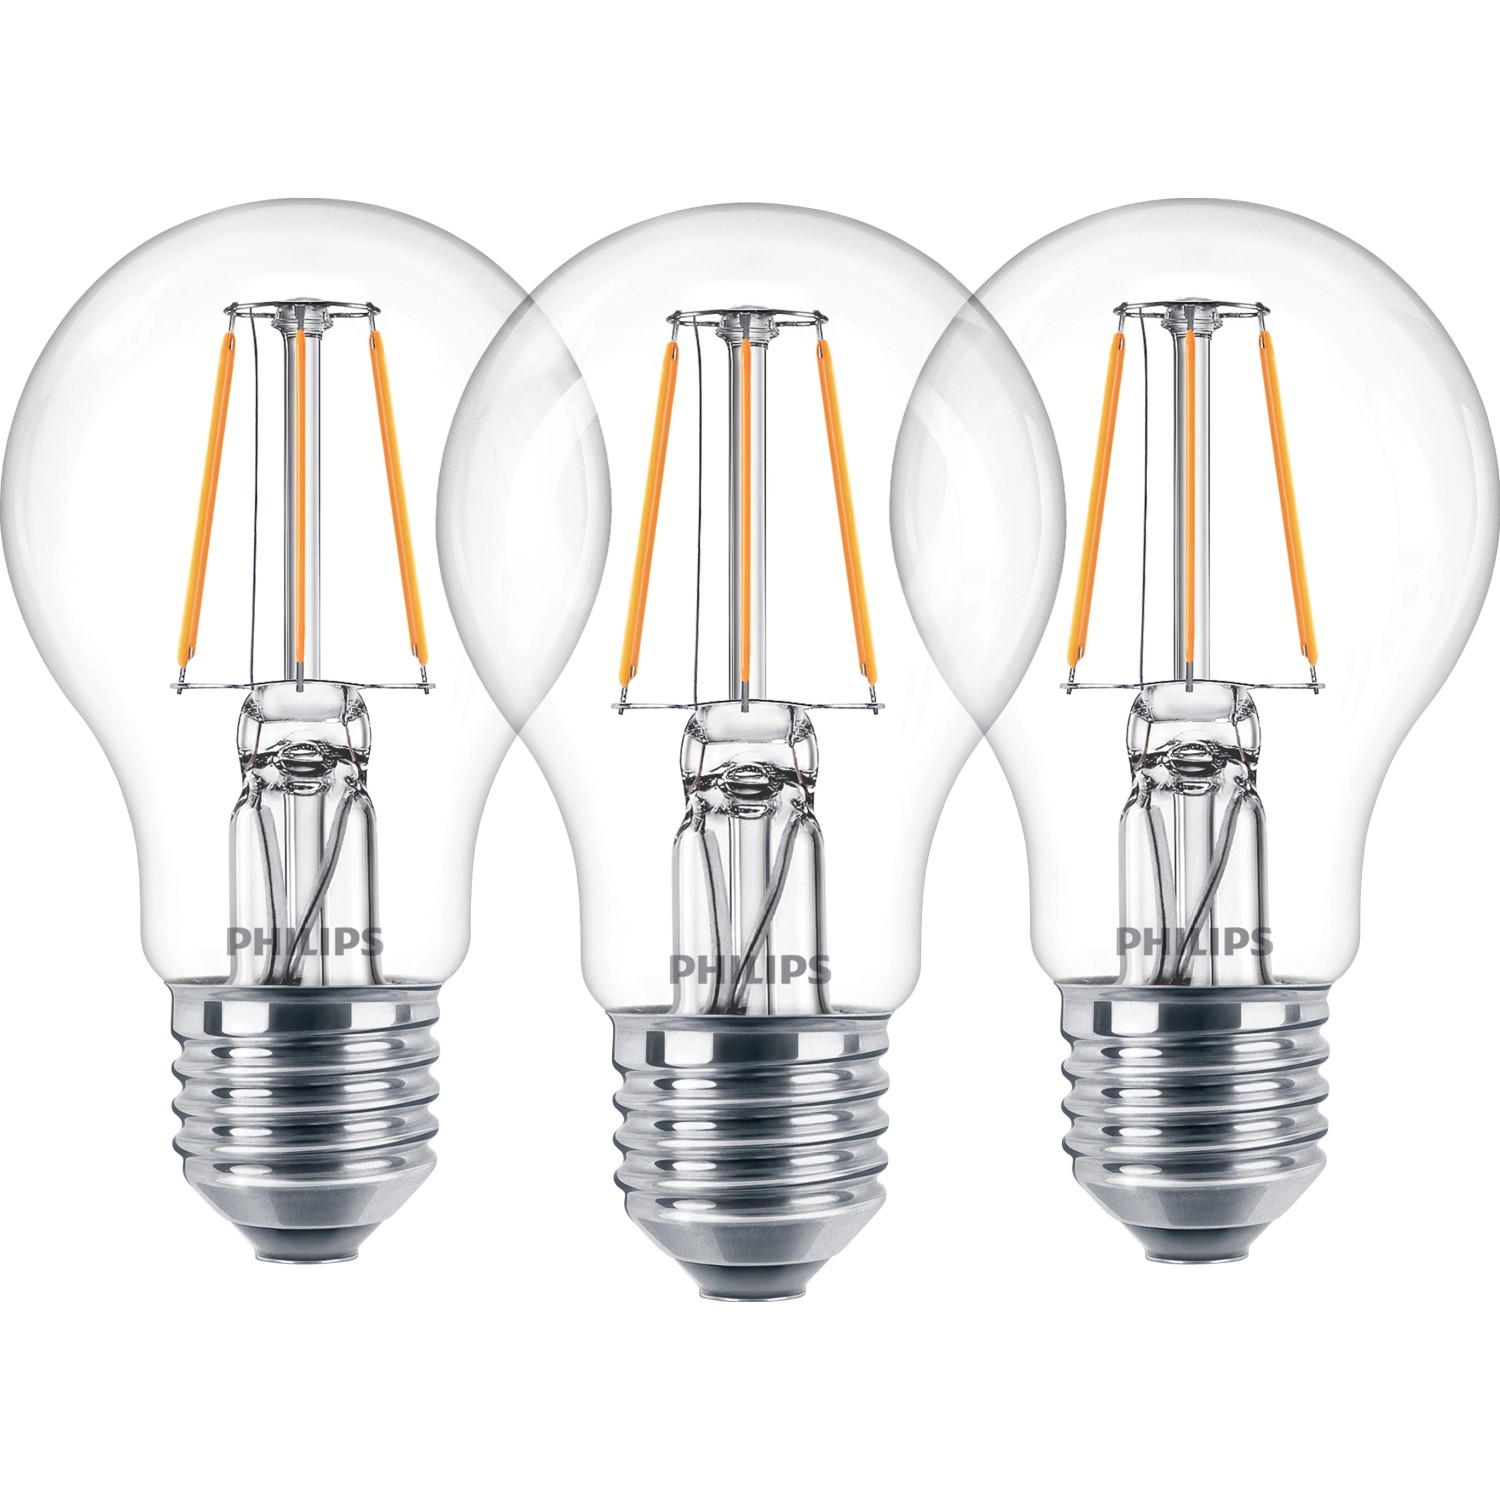 Philips LED-Lampe Glühlampenform 3er-Pack OBI W (470 Warmweiß bei E27/ kaufen A++ lm) EEK: 4,3